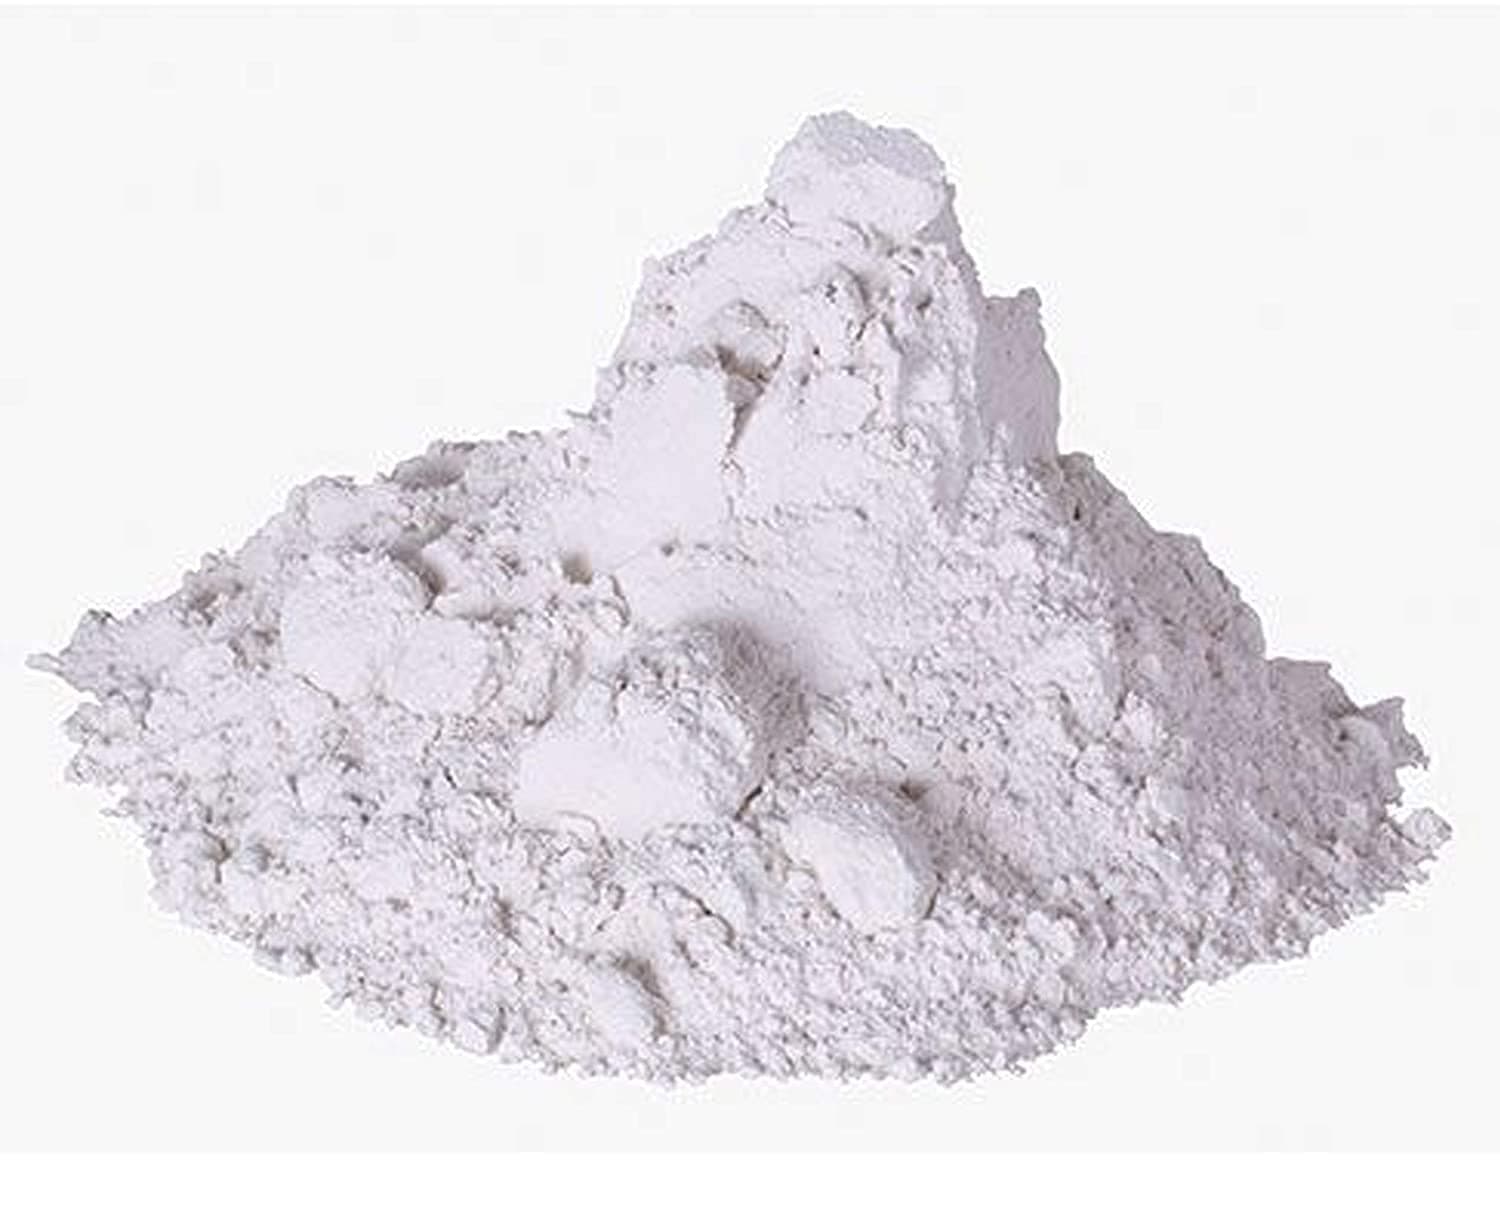 Chlorine powder